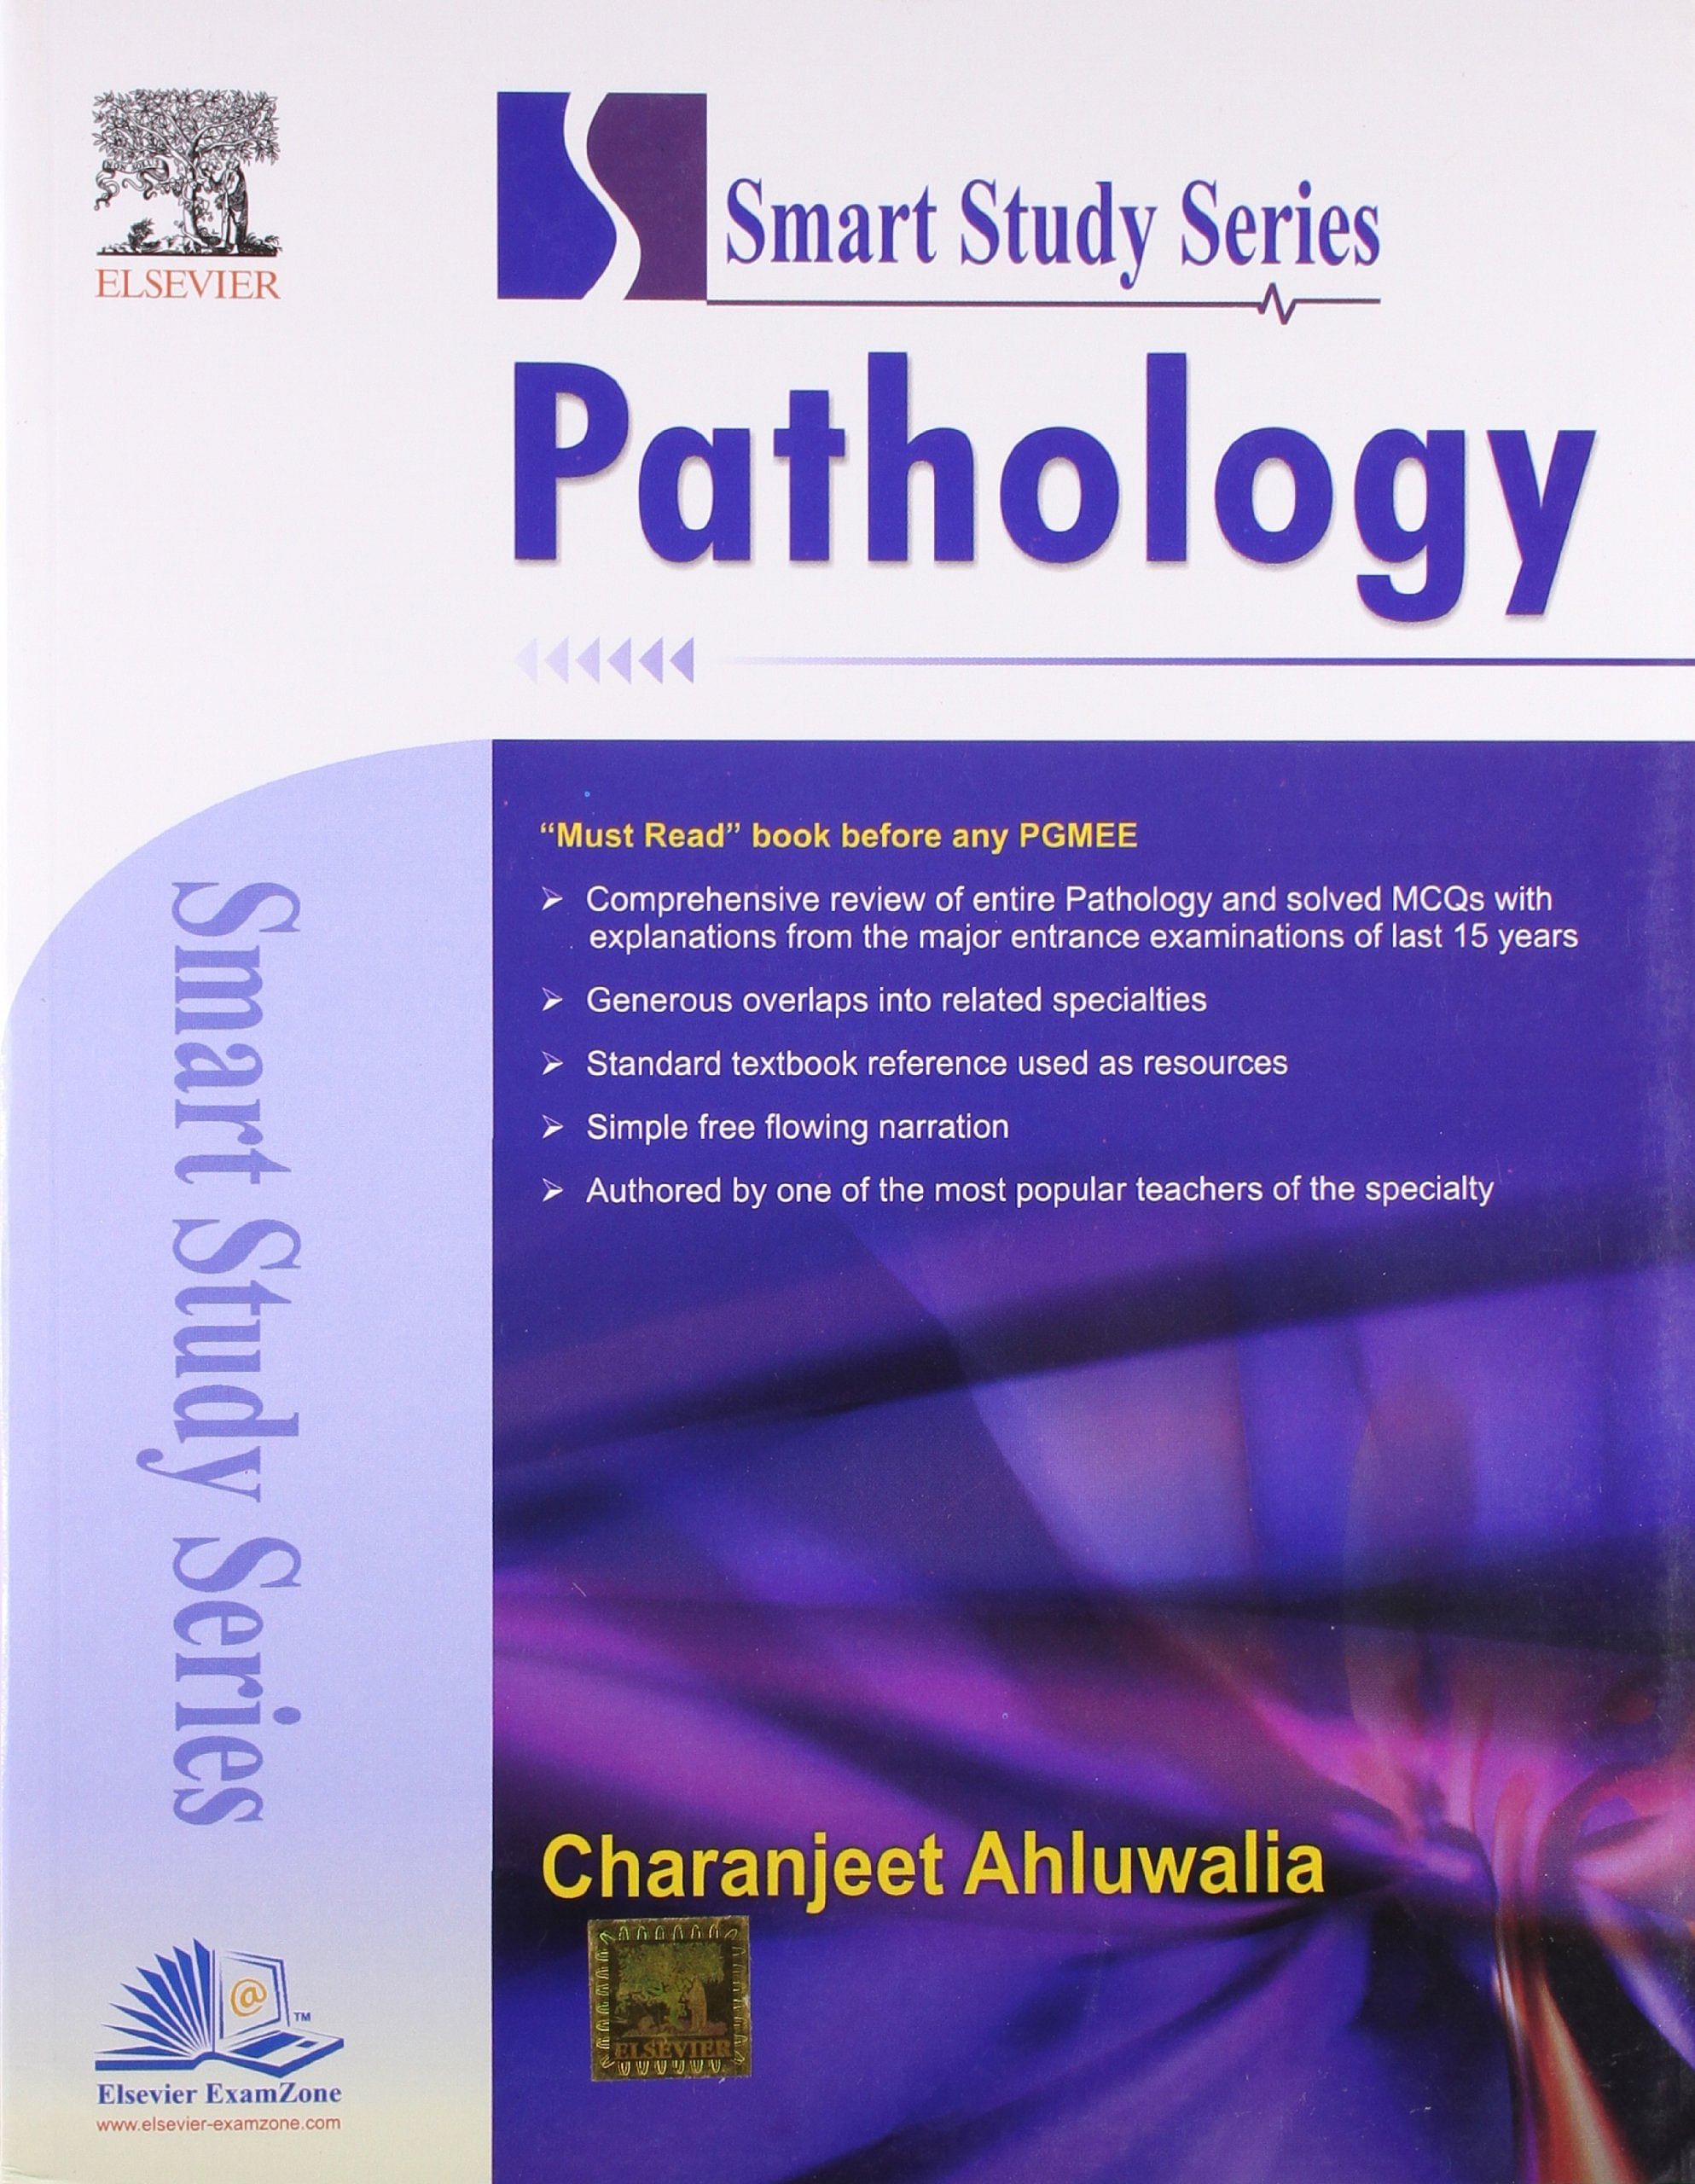 Smart Study Series: Pathology by Charanjeet Ahluwalia